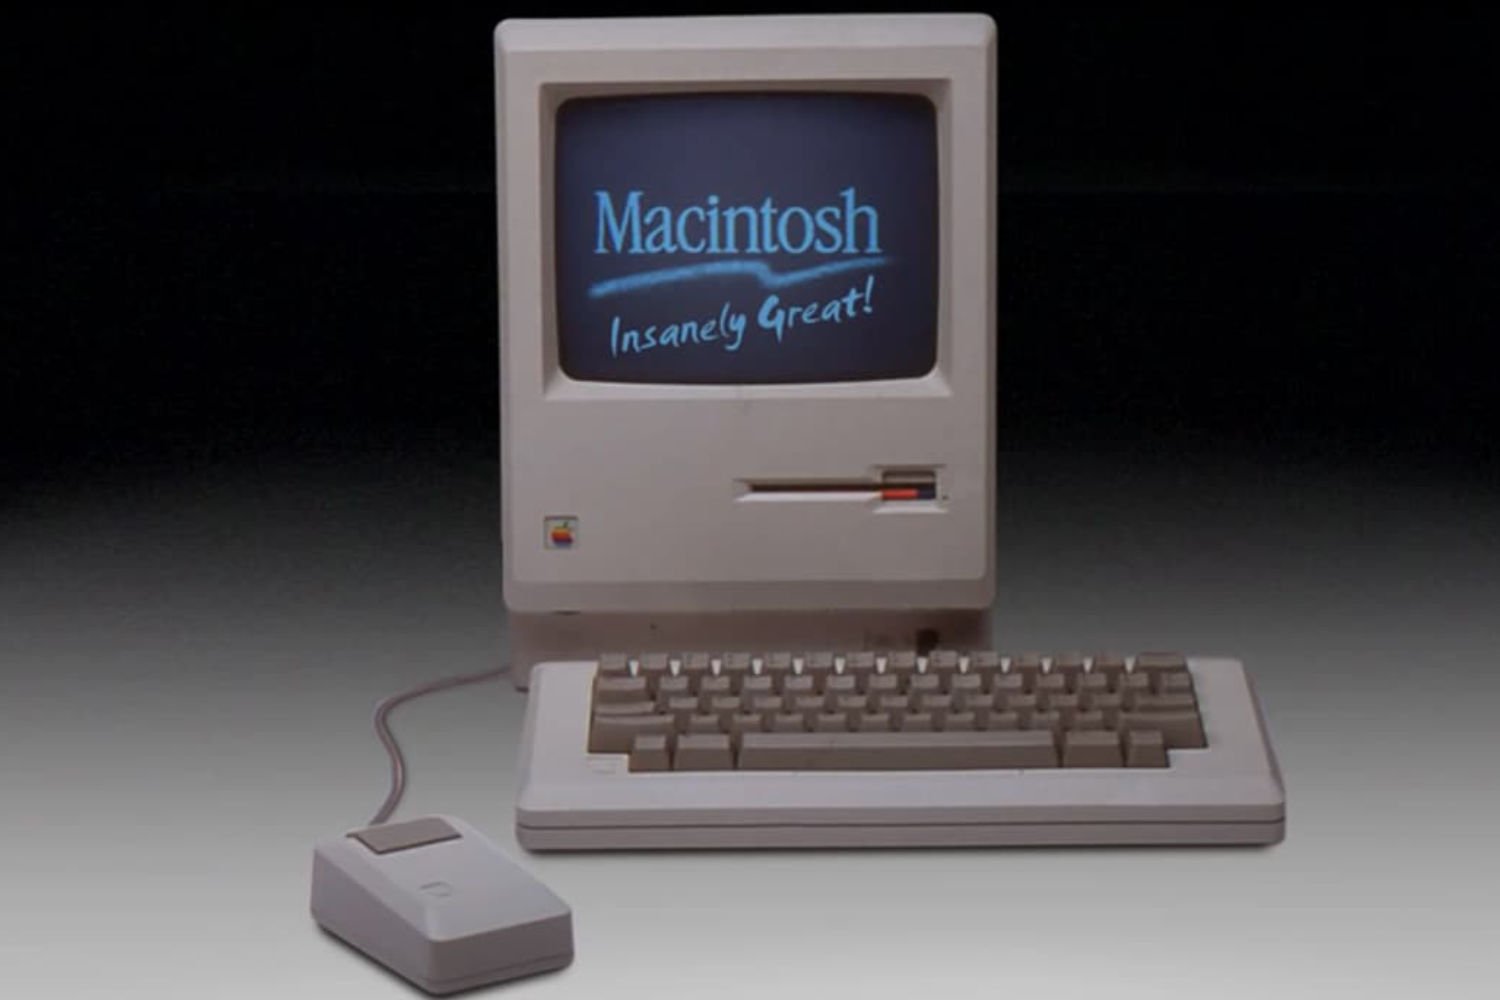 Macintosh apple 2